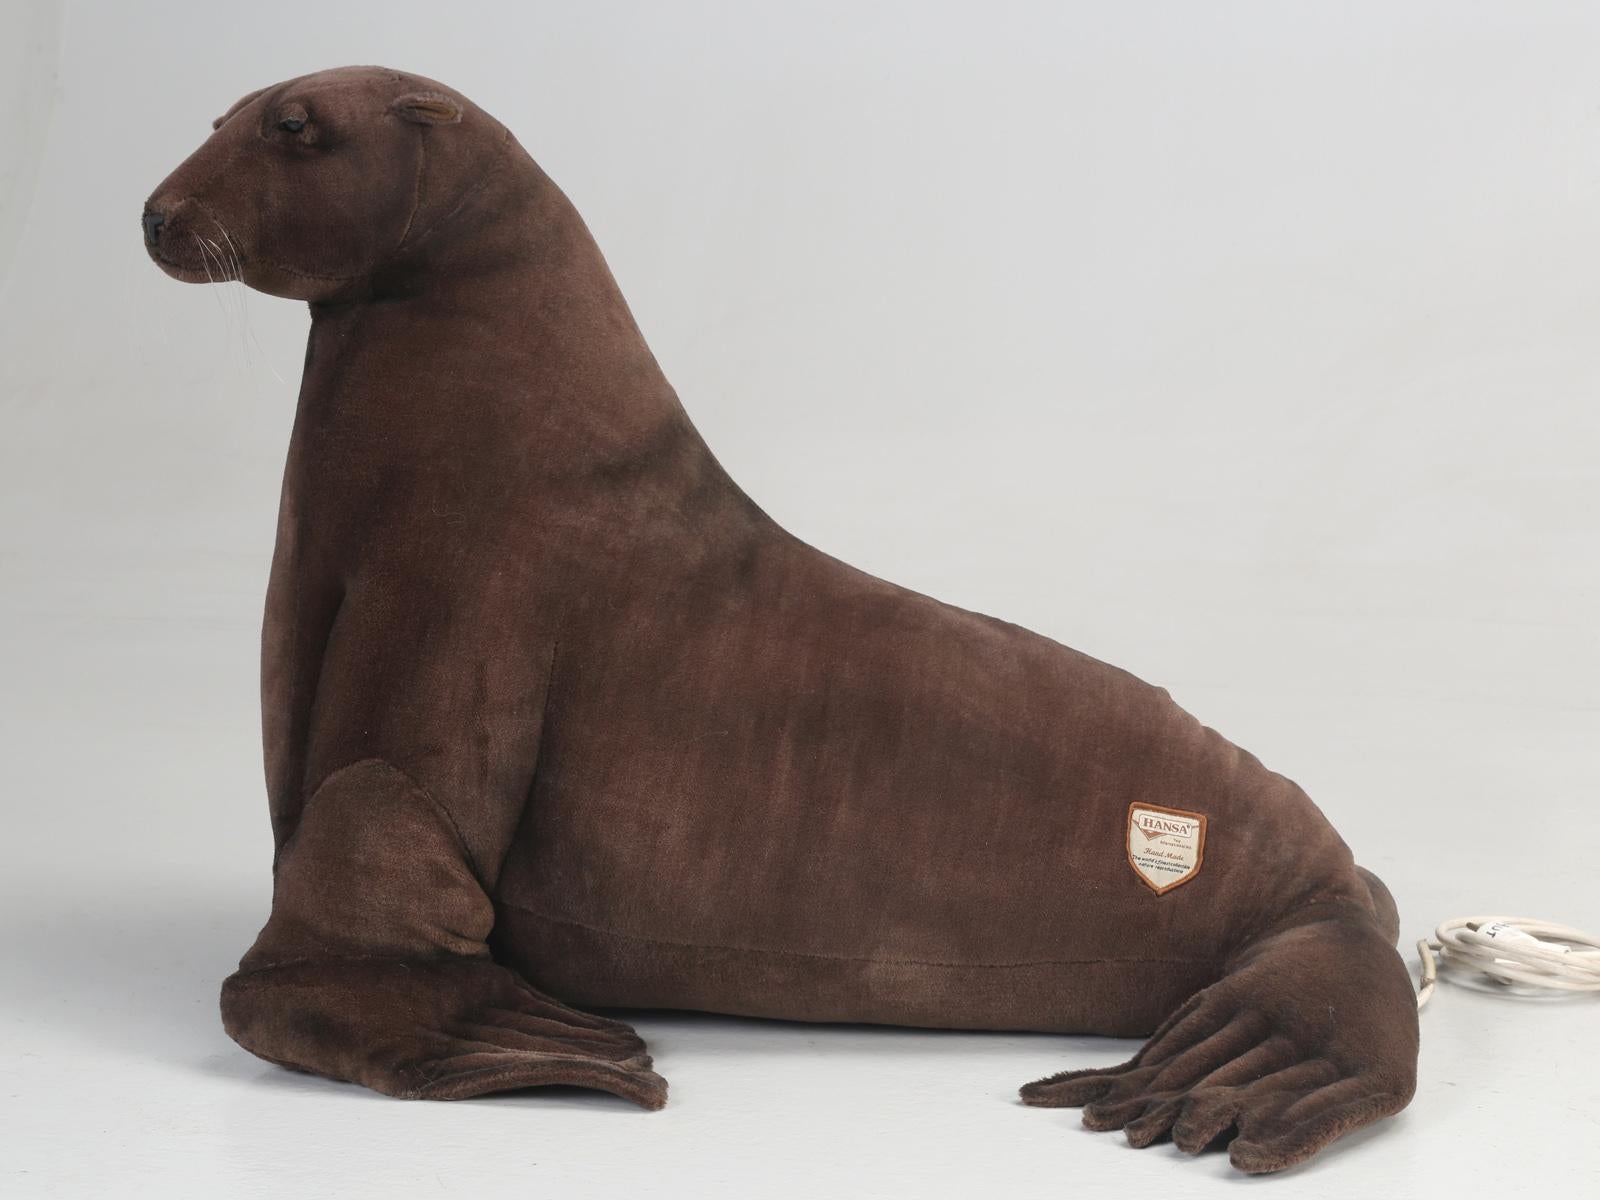 Philippine Hansa Stuffed Mechanical Seal Stuffed Animal